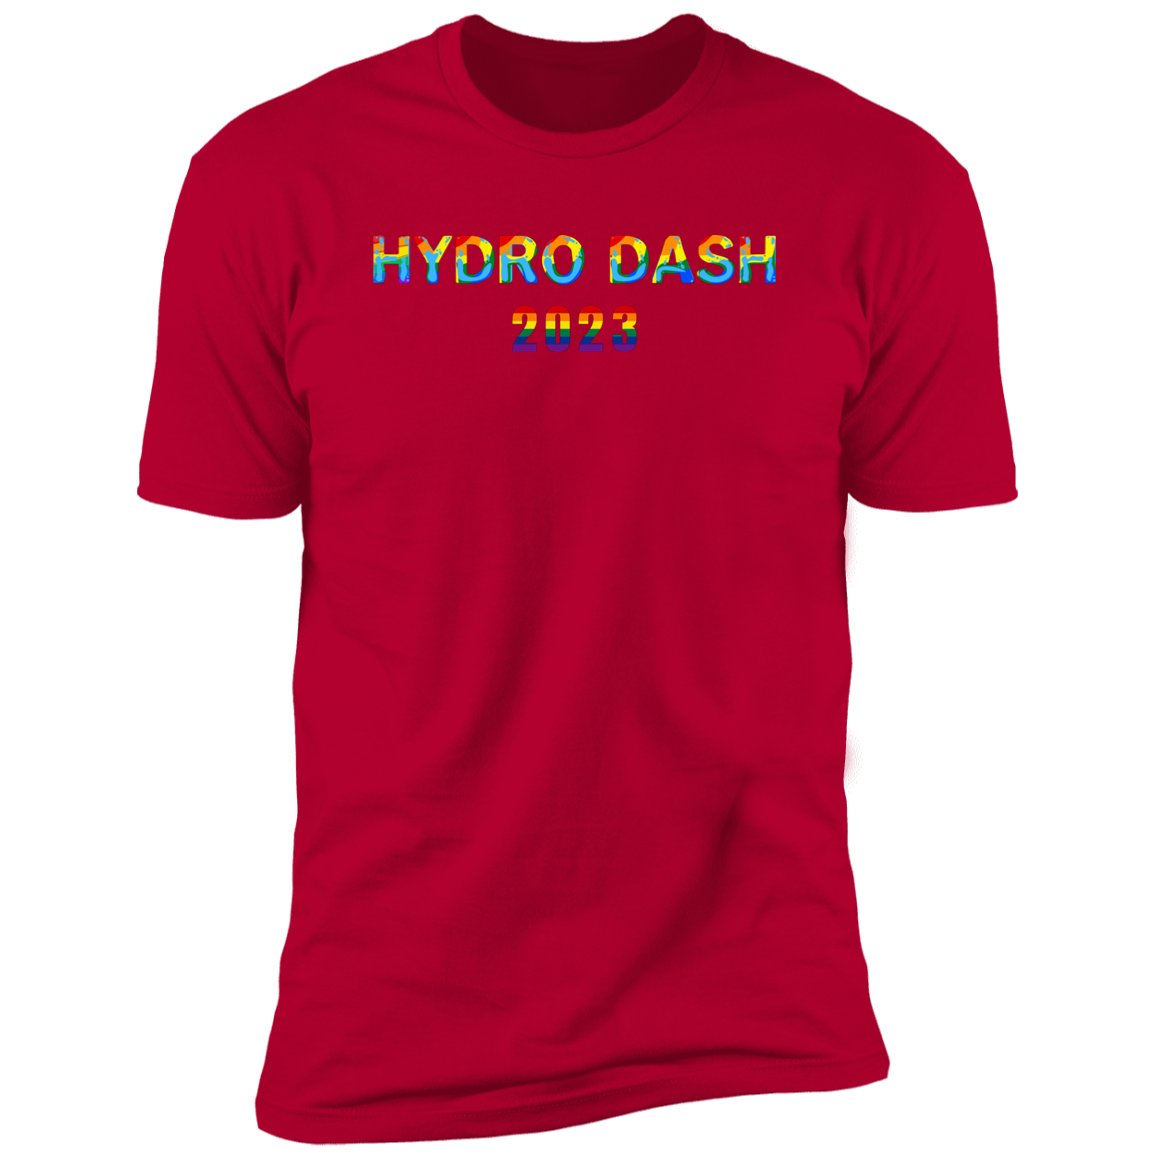 Hydro Dash Pride 2023 t-shirt, dog pride dog Hydro dash shirt for humans, in red